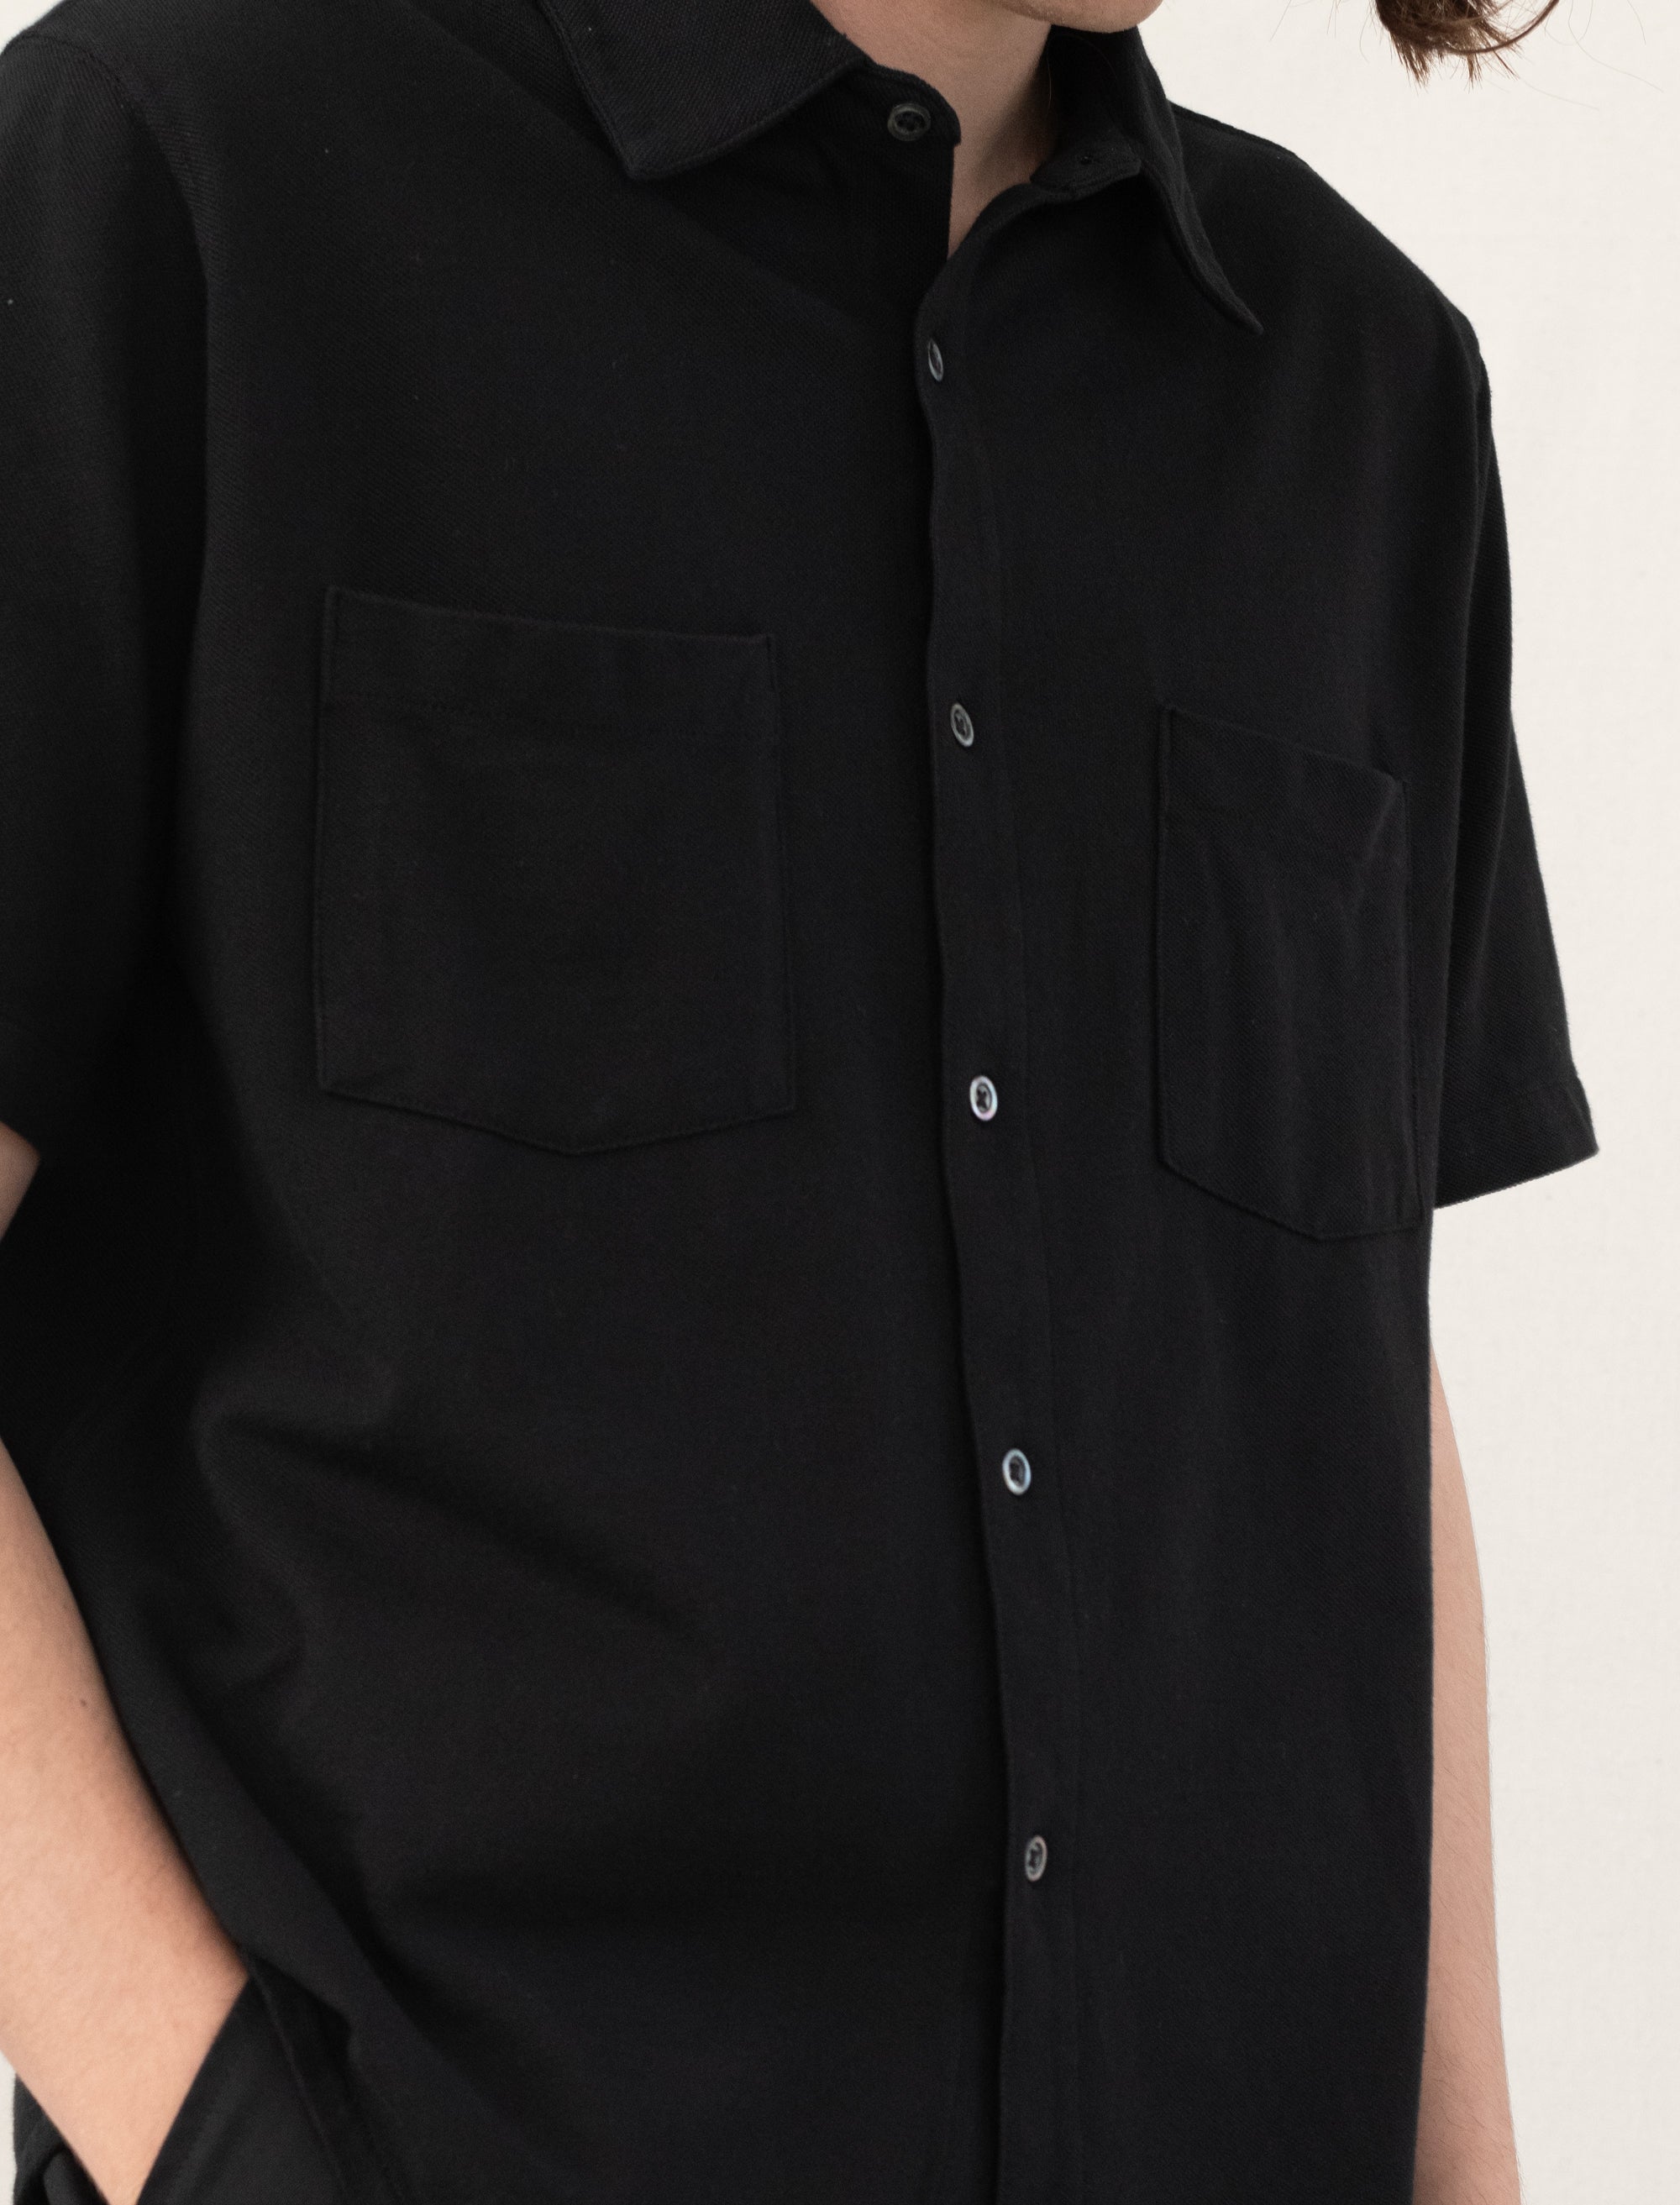 Pique Work Shirt (Black)